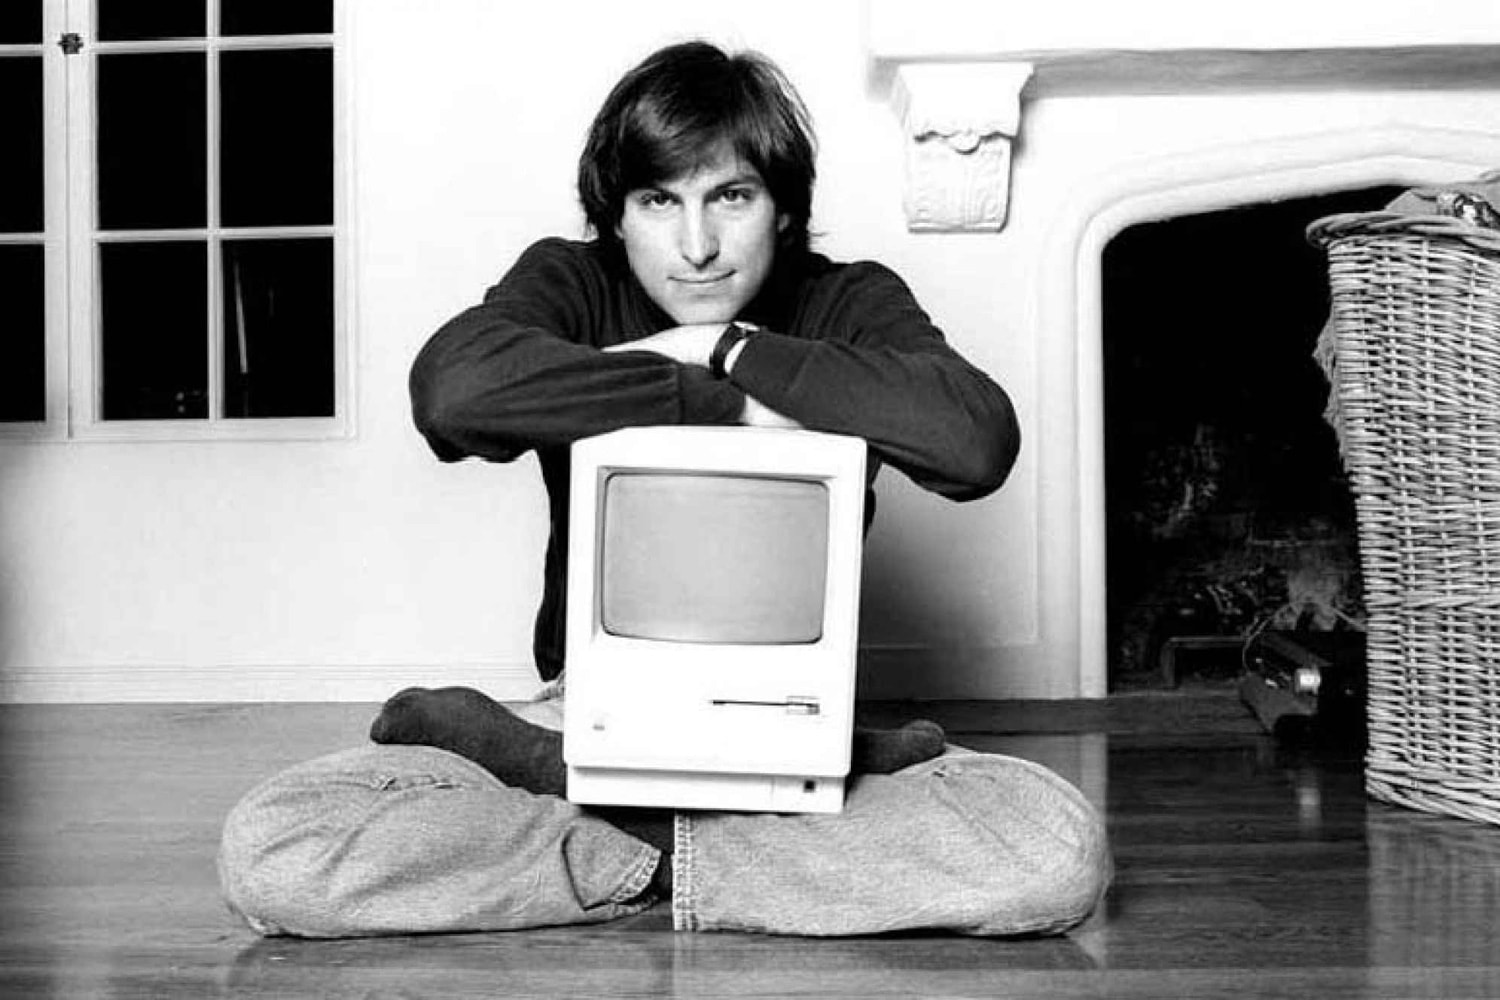 Seiko Steve Jobs Watch 1984 portrait